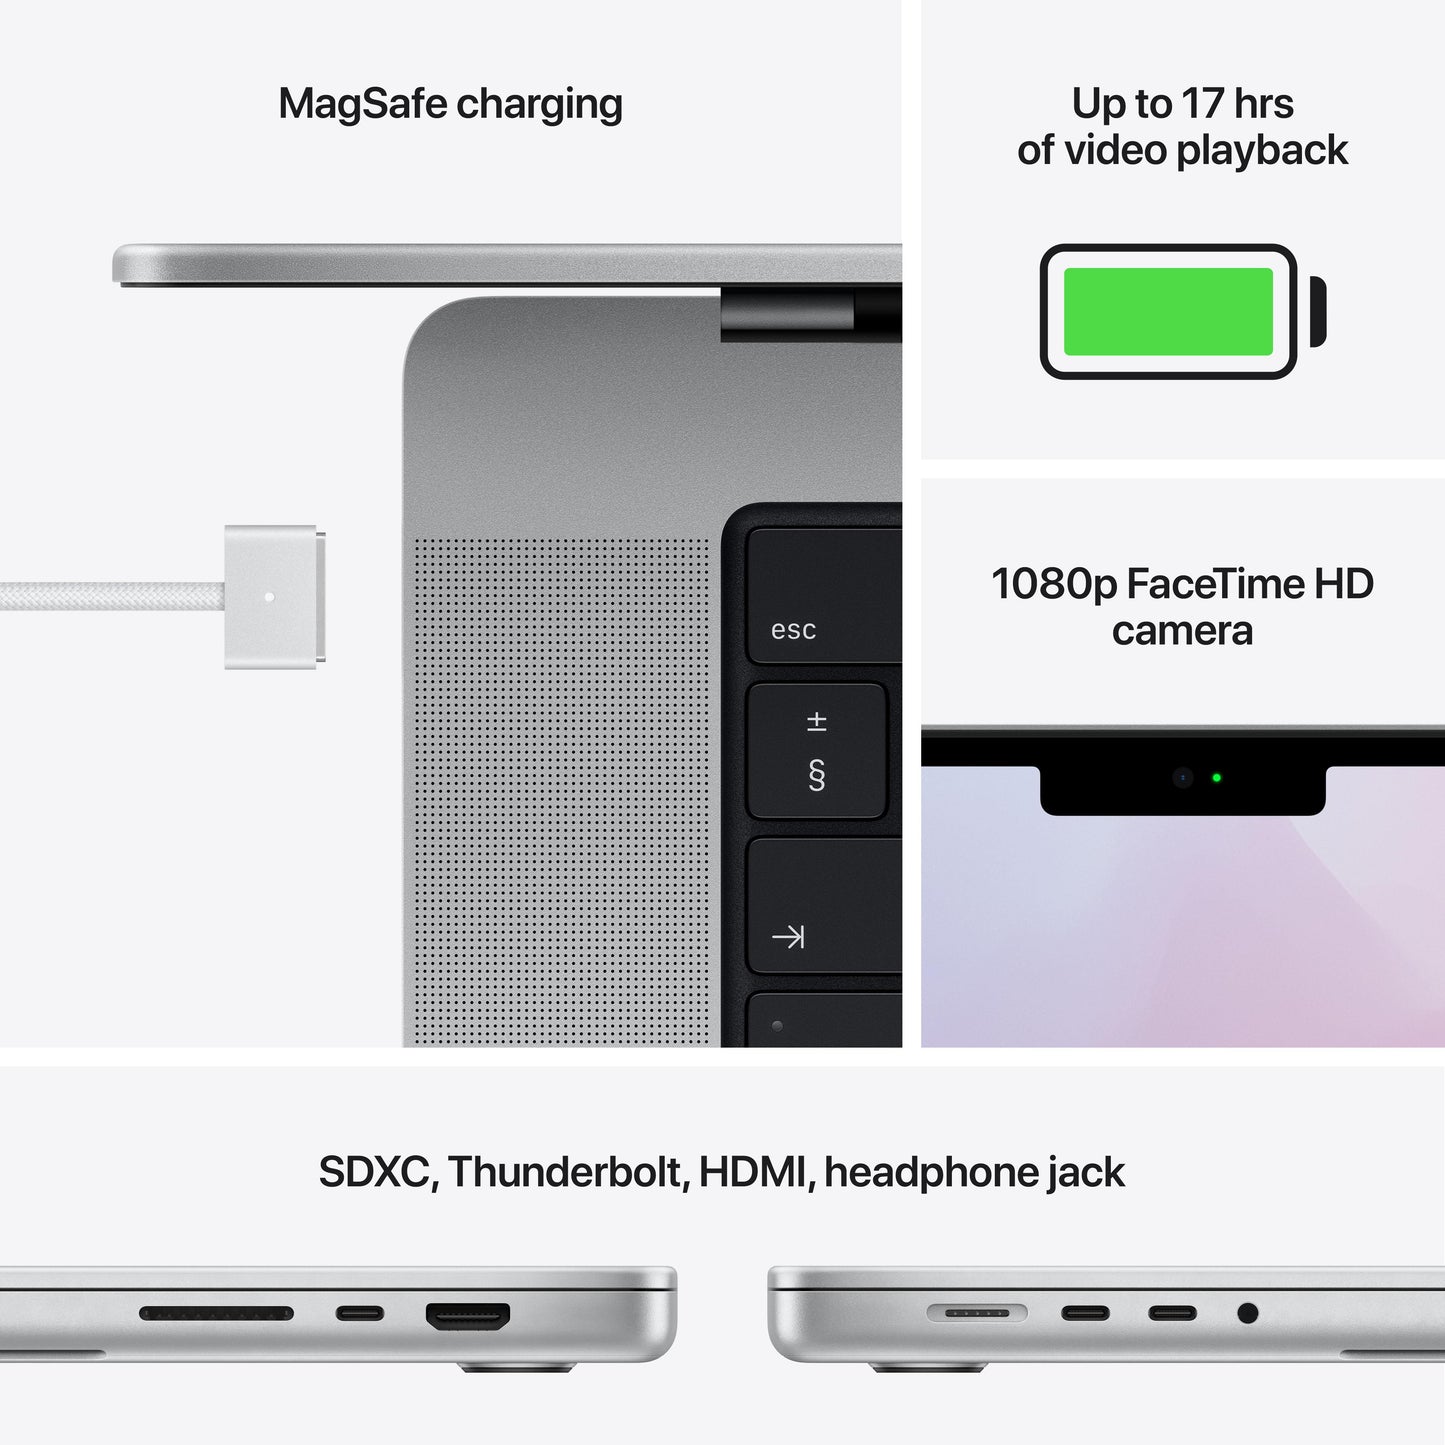 14-inch MacBook Pro: Apple M1 Pro chip with 8‑core CPU and 14‑core GPU, 512GB SSD - Silver